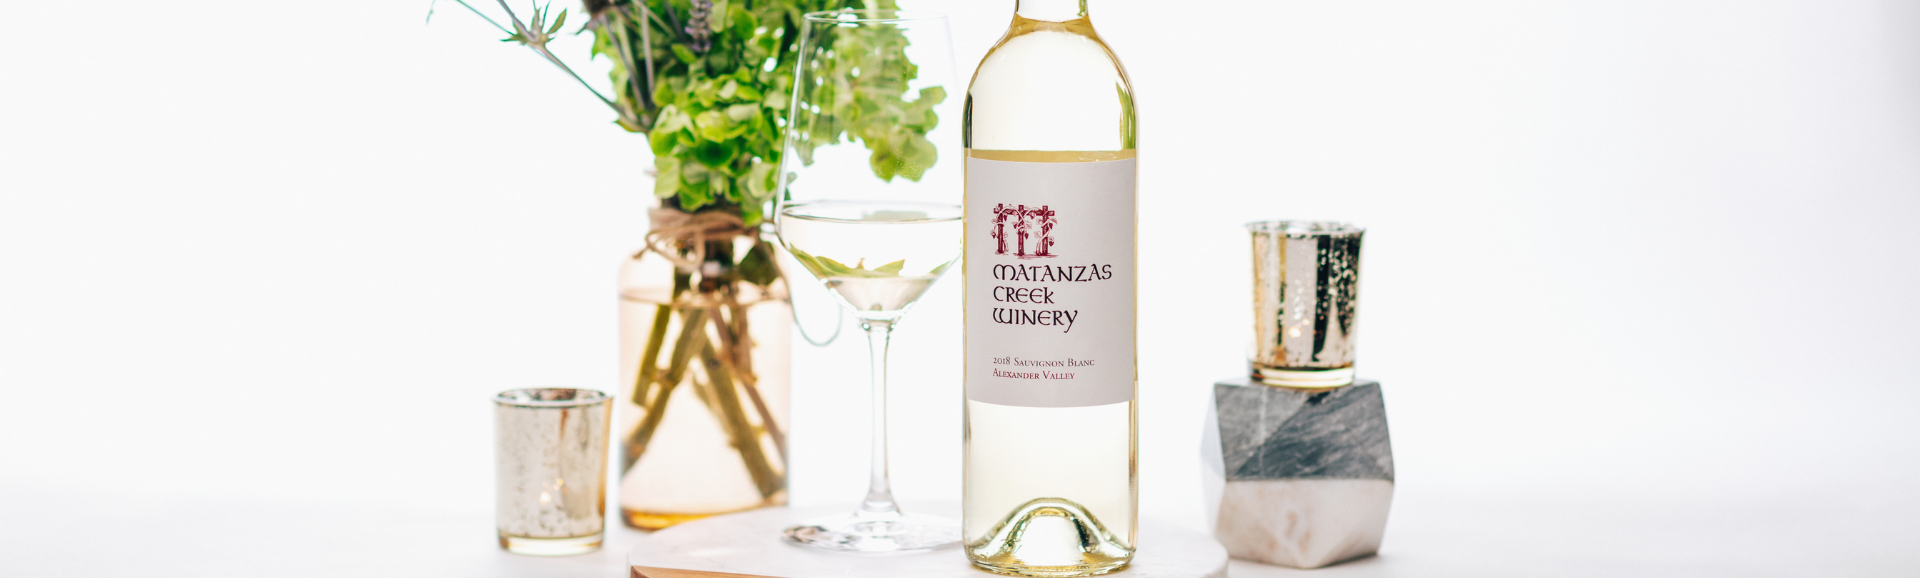 Bottle of Matanaza Creek Sauvignon Blanc